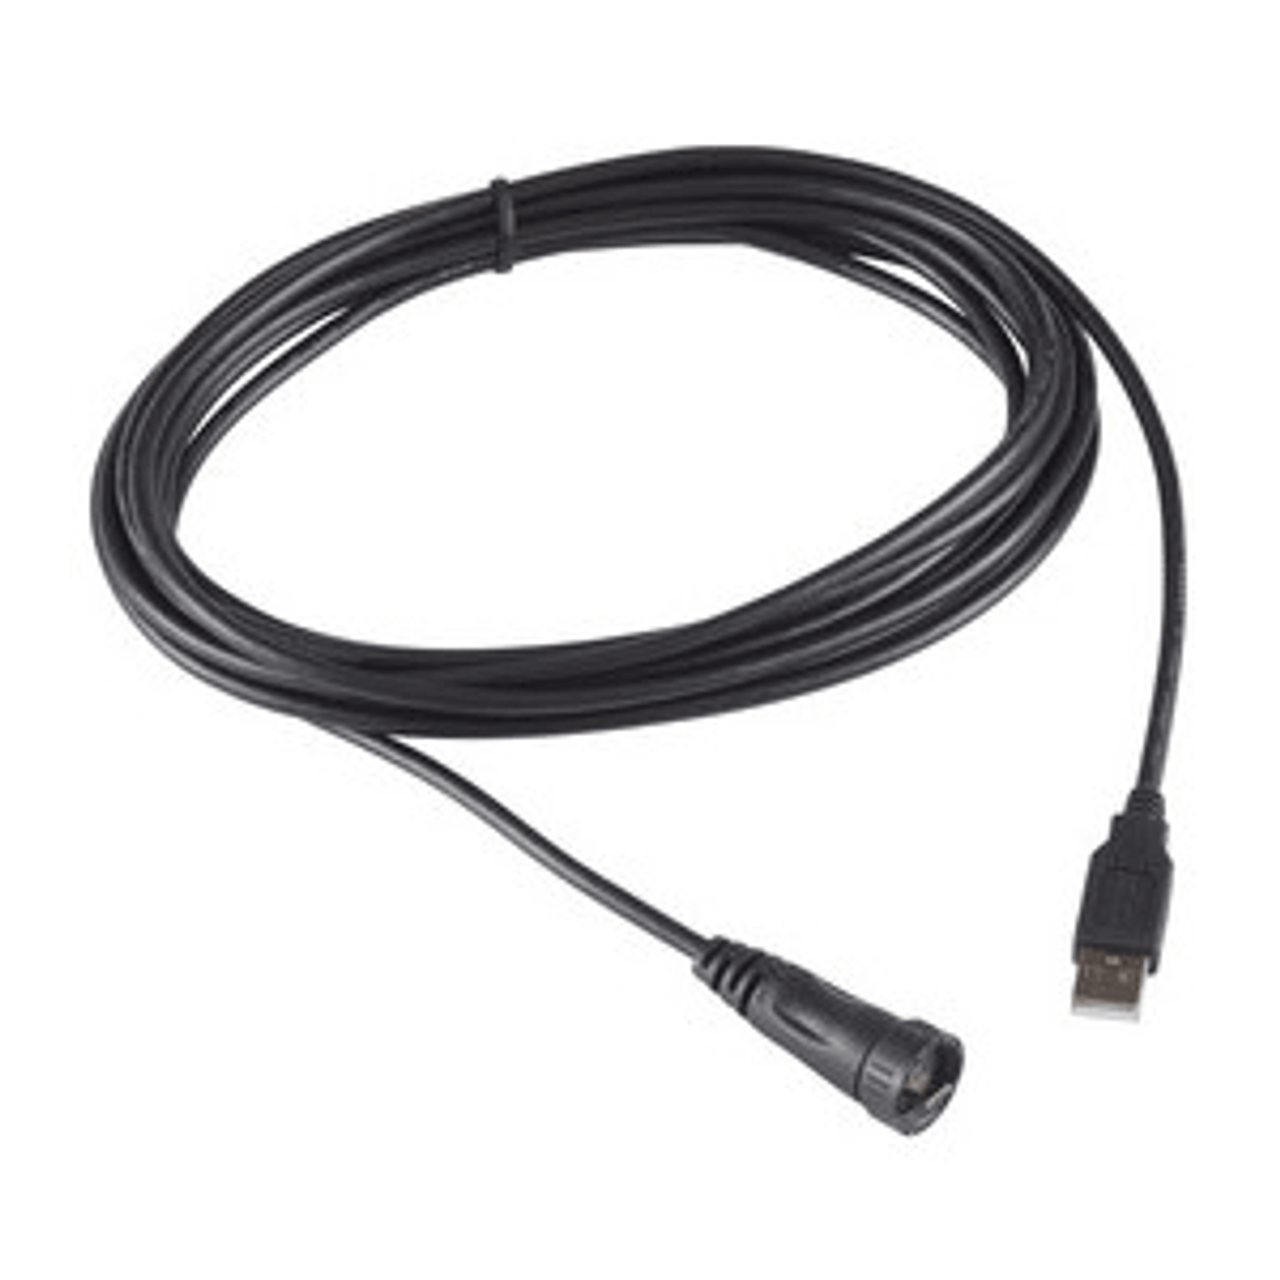 Garmin USB Cable f/GPSMAP 8400/8600-010-12390-10-karibouusa.com